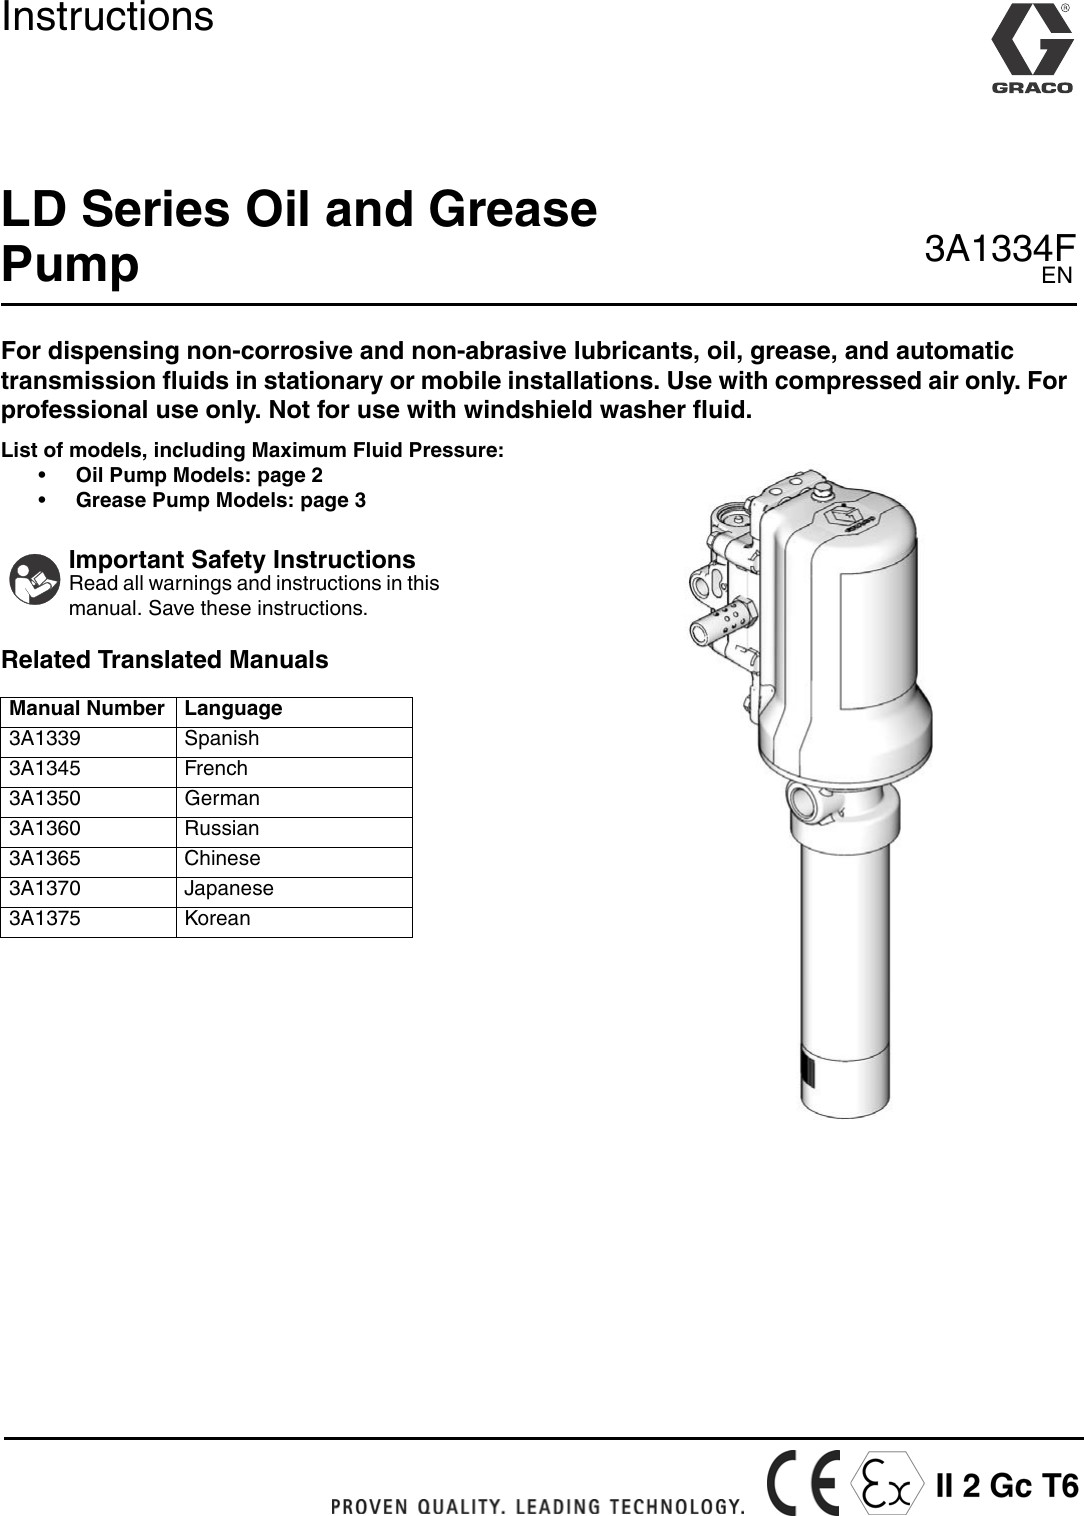 Graco 3A1334F LD Series Oil And Grease Pump Instrucions English User Manual To The Fa8f1e1d edbf 4c91 9950 a895df46b3ad